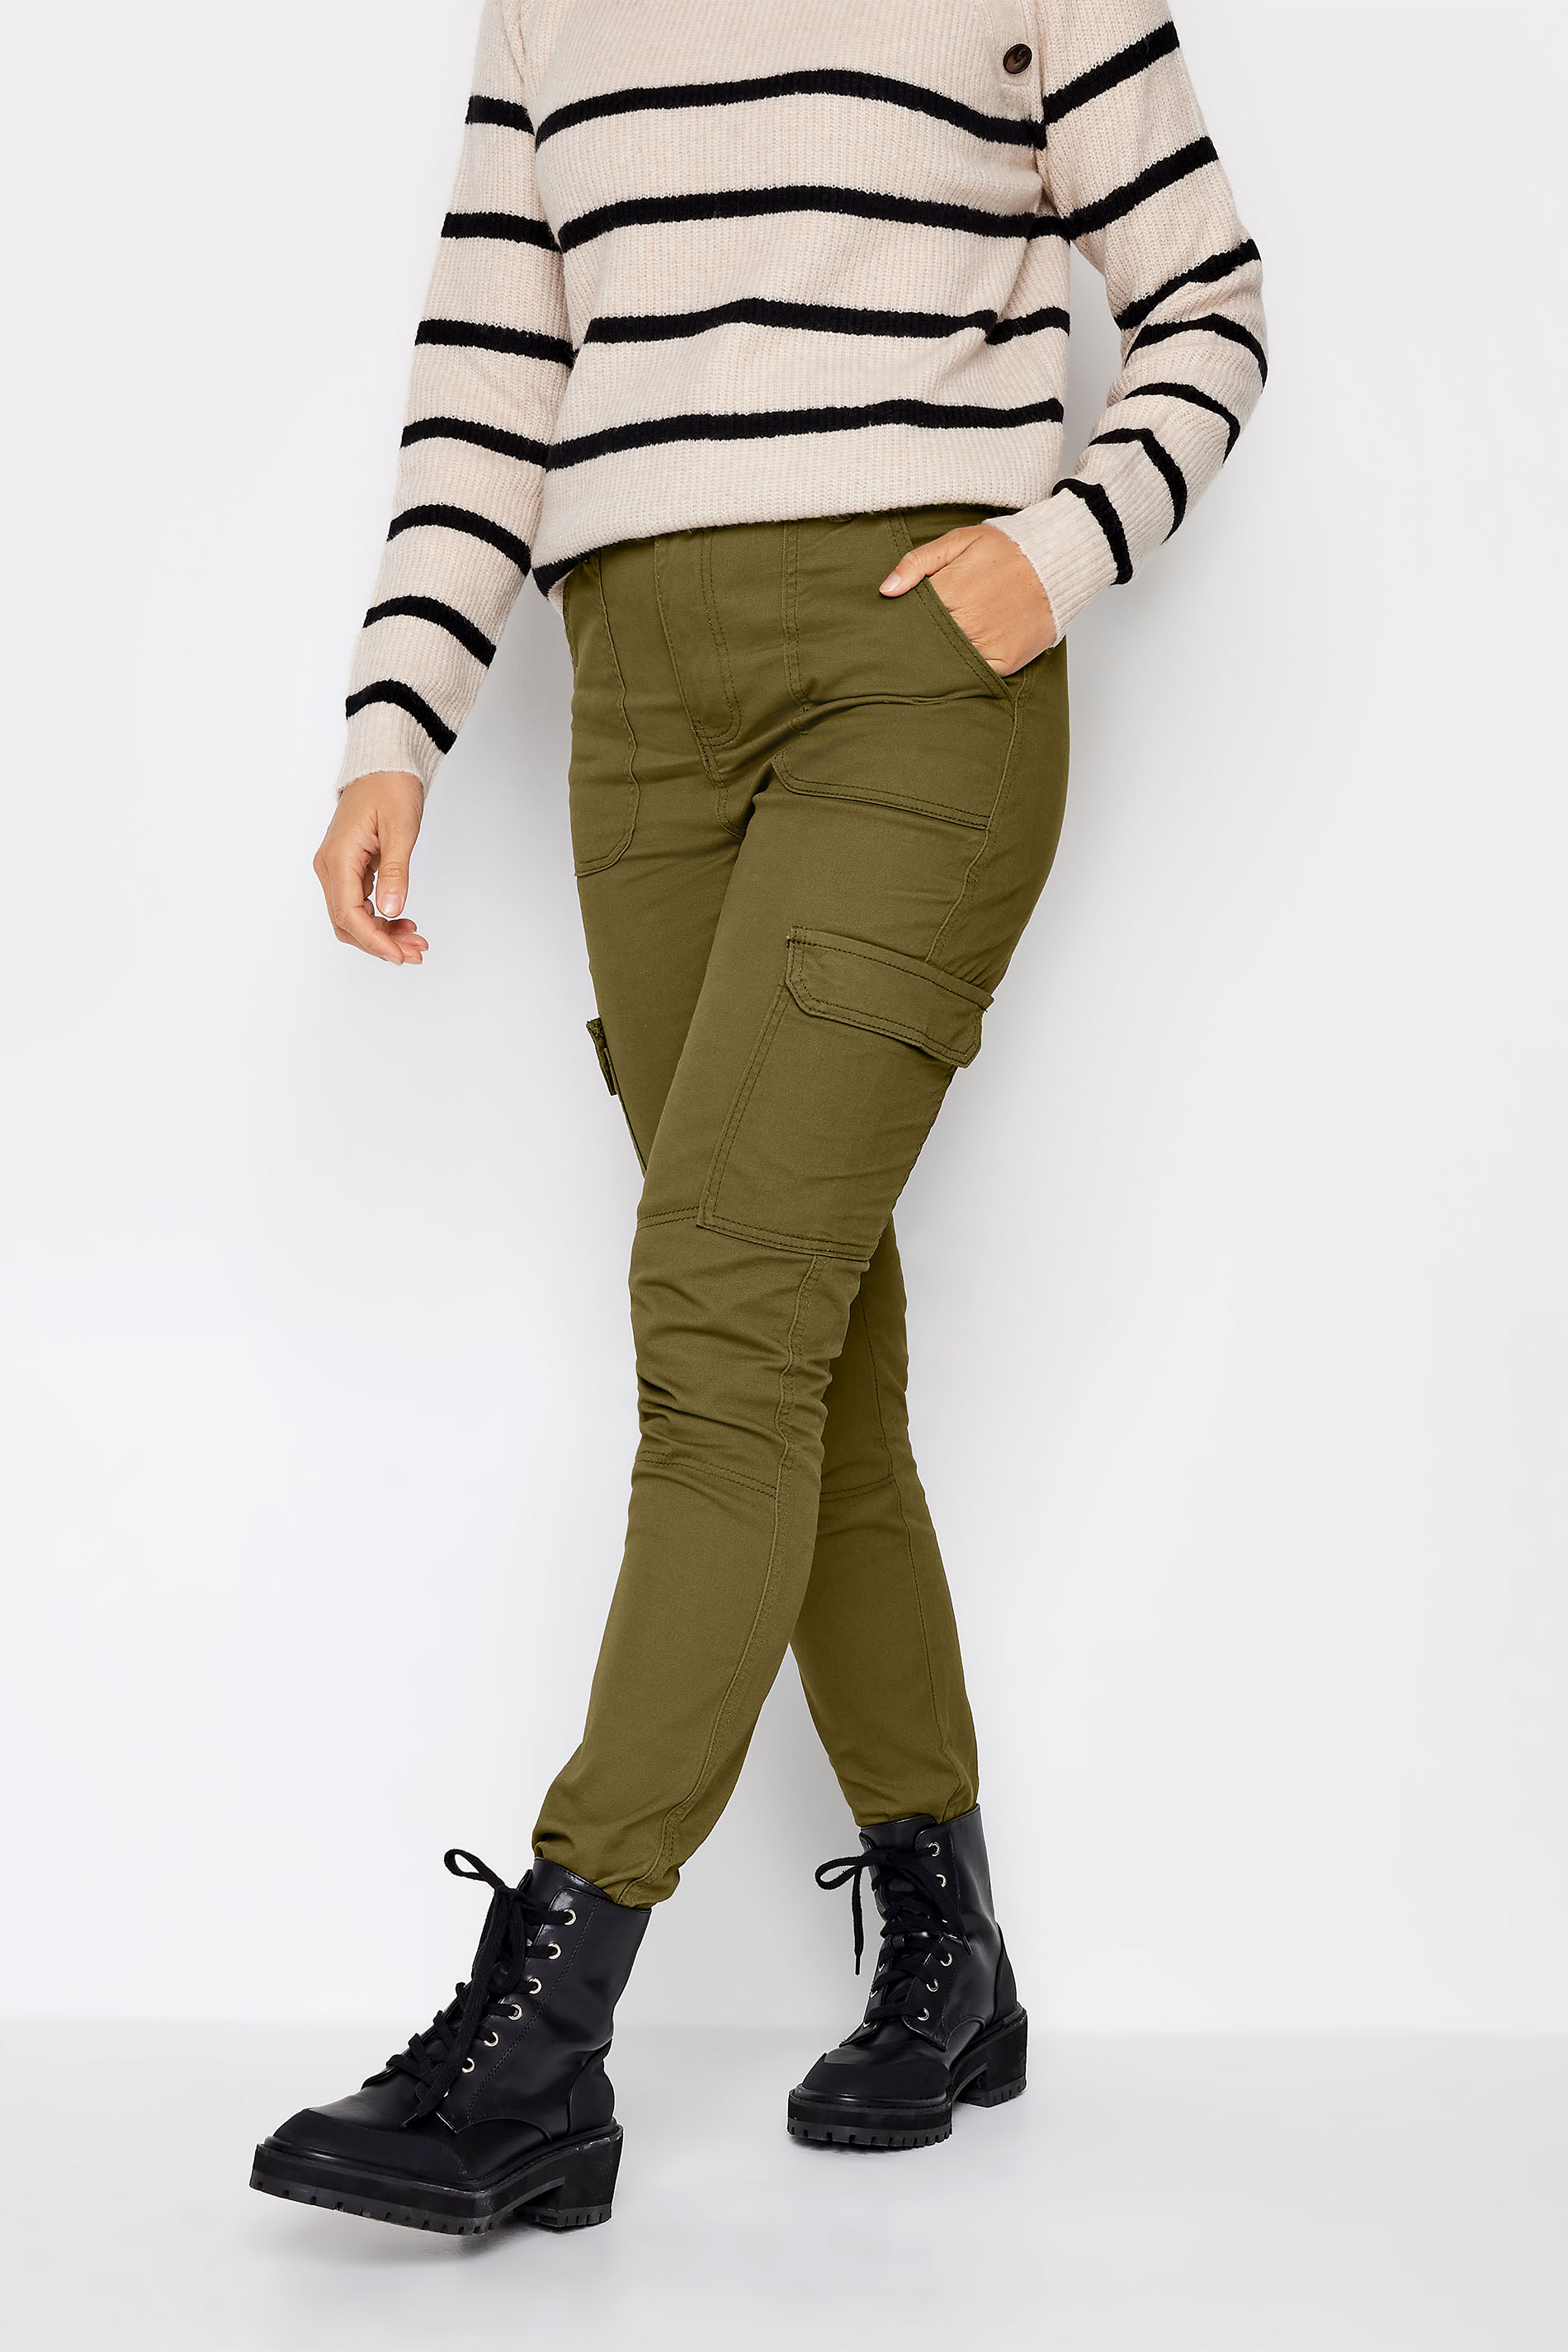 LTS Tall Khaki Green Cargo Skinny Jeans | Long Tall Sally  1